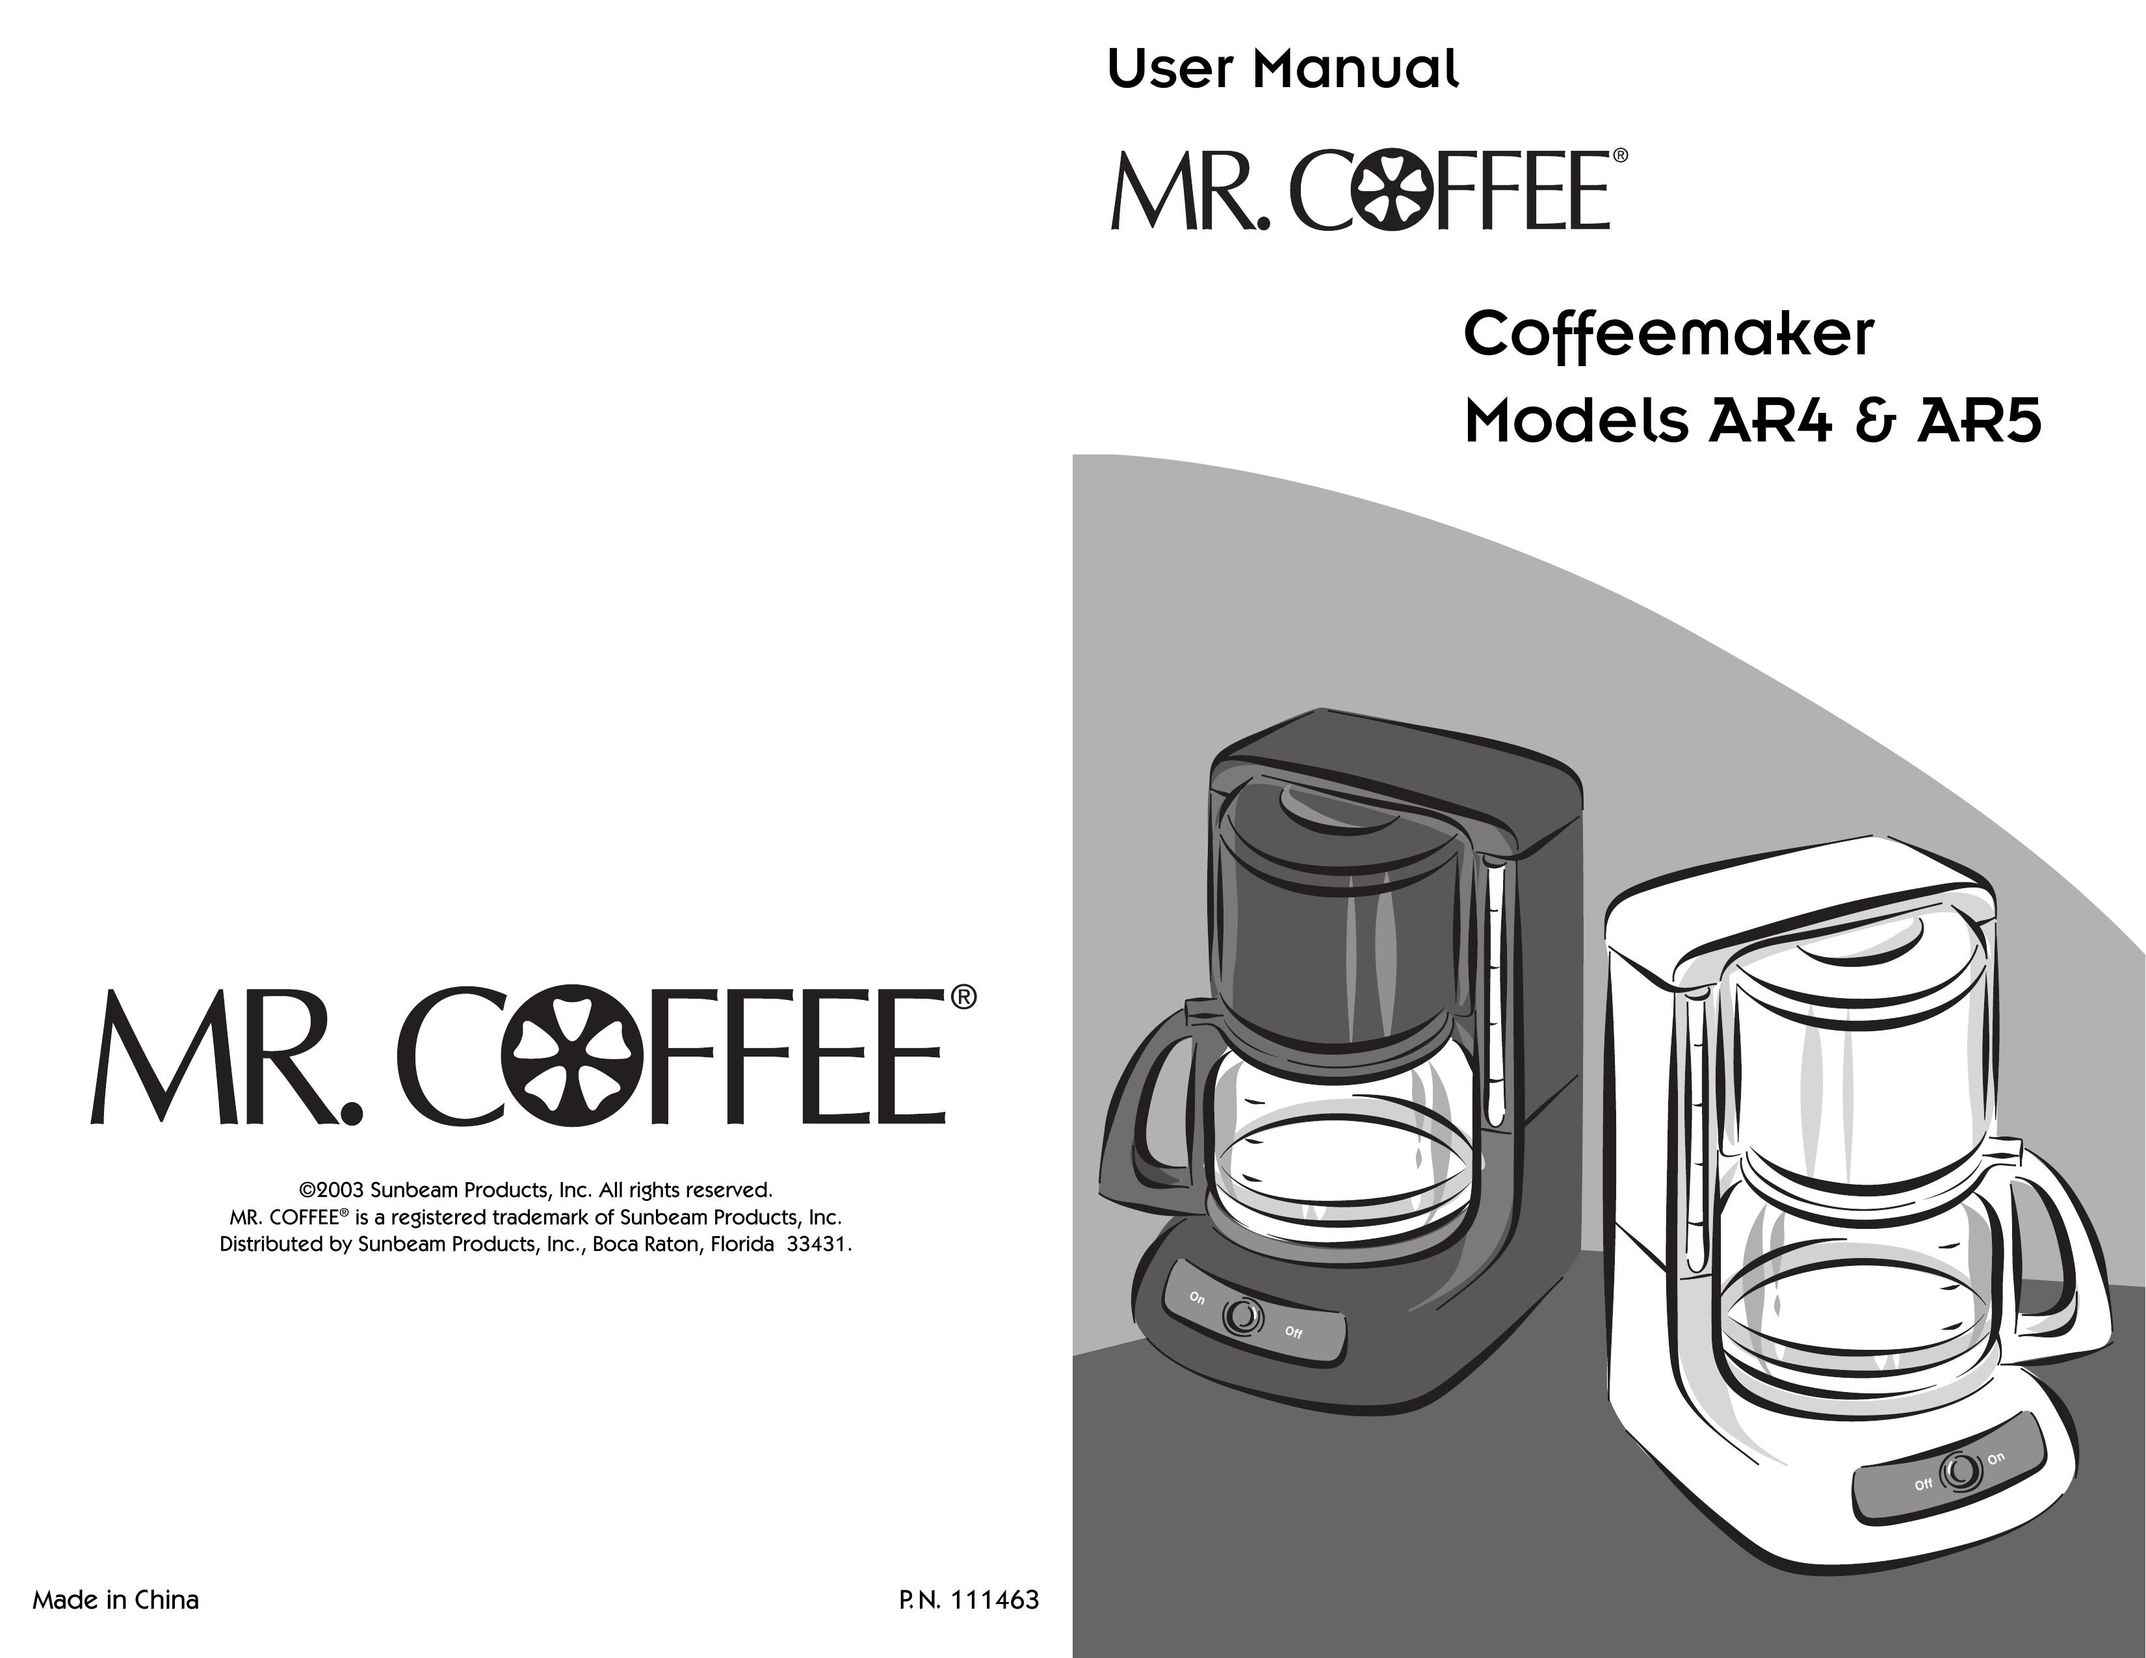 Mr. Coffee AR5 Coffeemaker User Manual